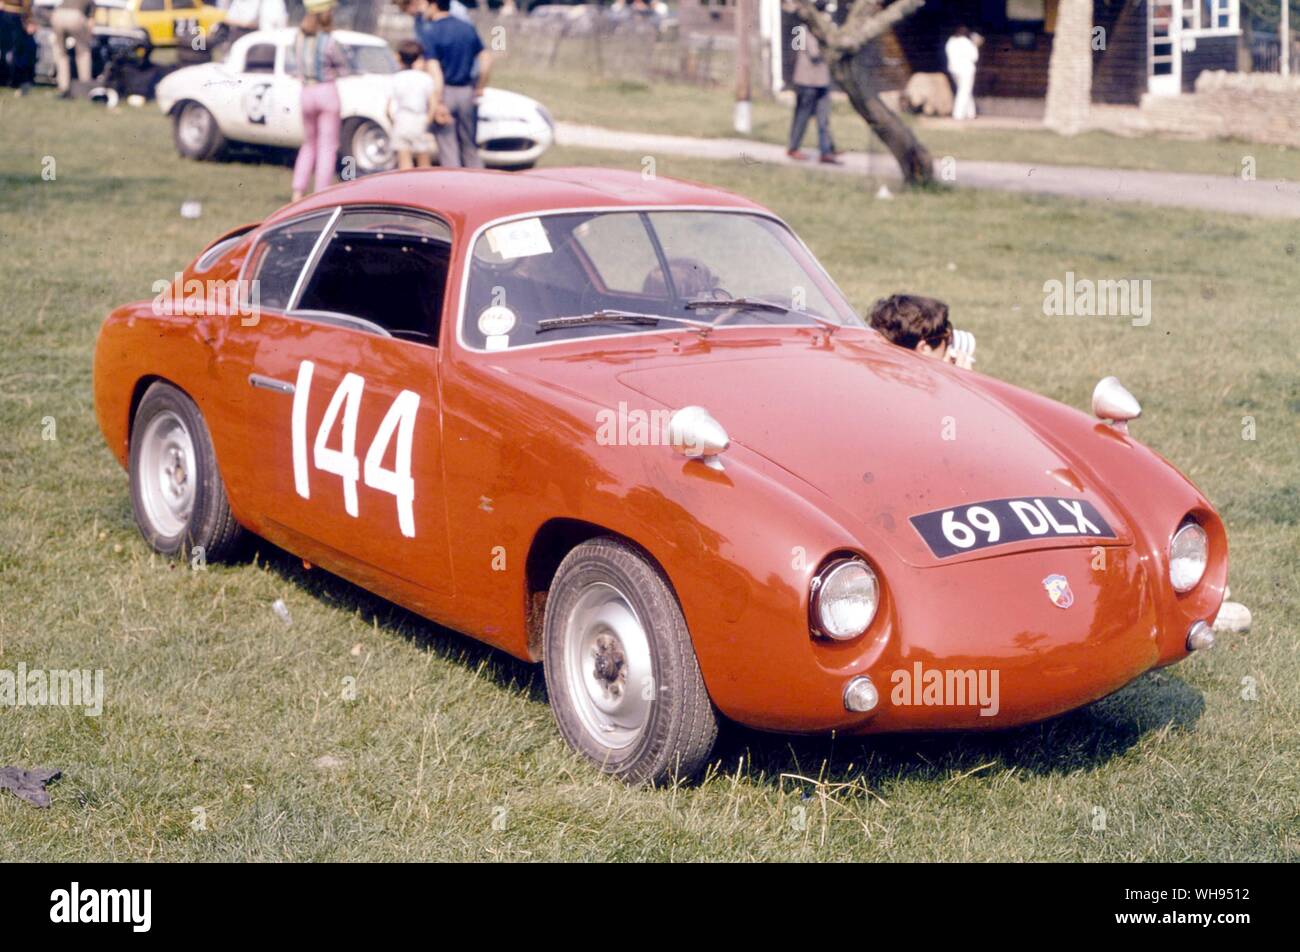 1956 Fiat Abarth racing car Stock Photo